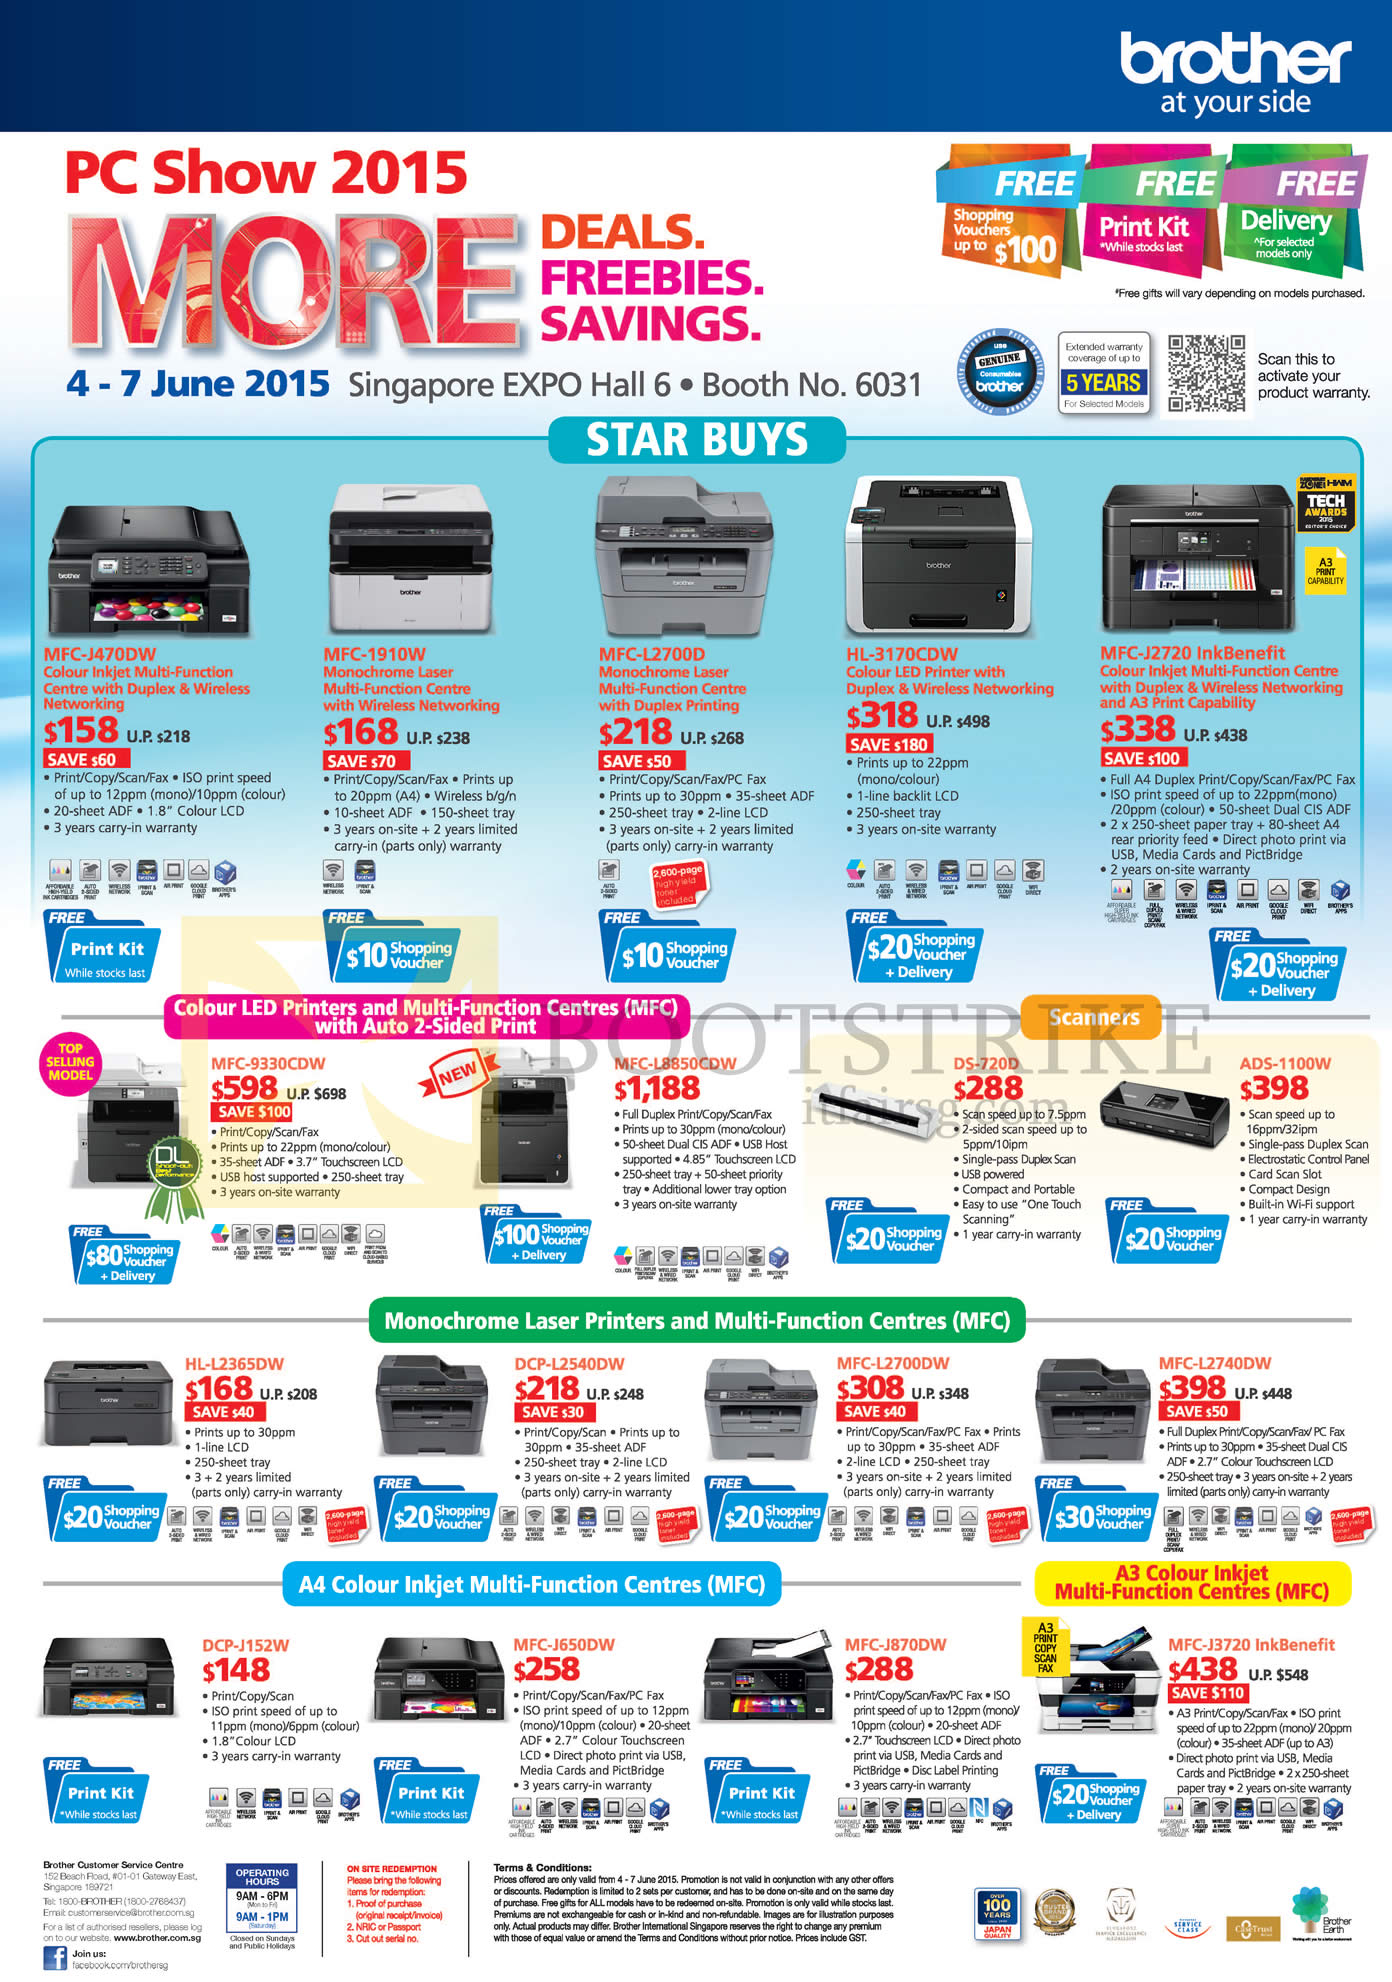 PC SHOW 2015 price list image brochure of Brother Printers Laser Inkjet Colour LED MFC, HL, DCP, MFC